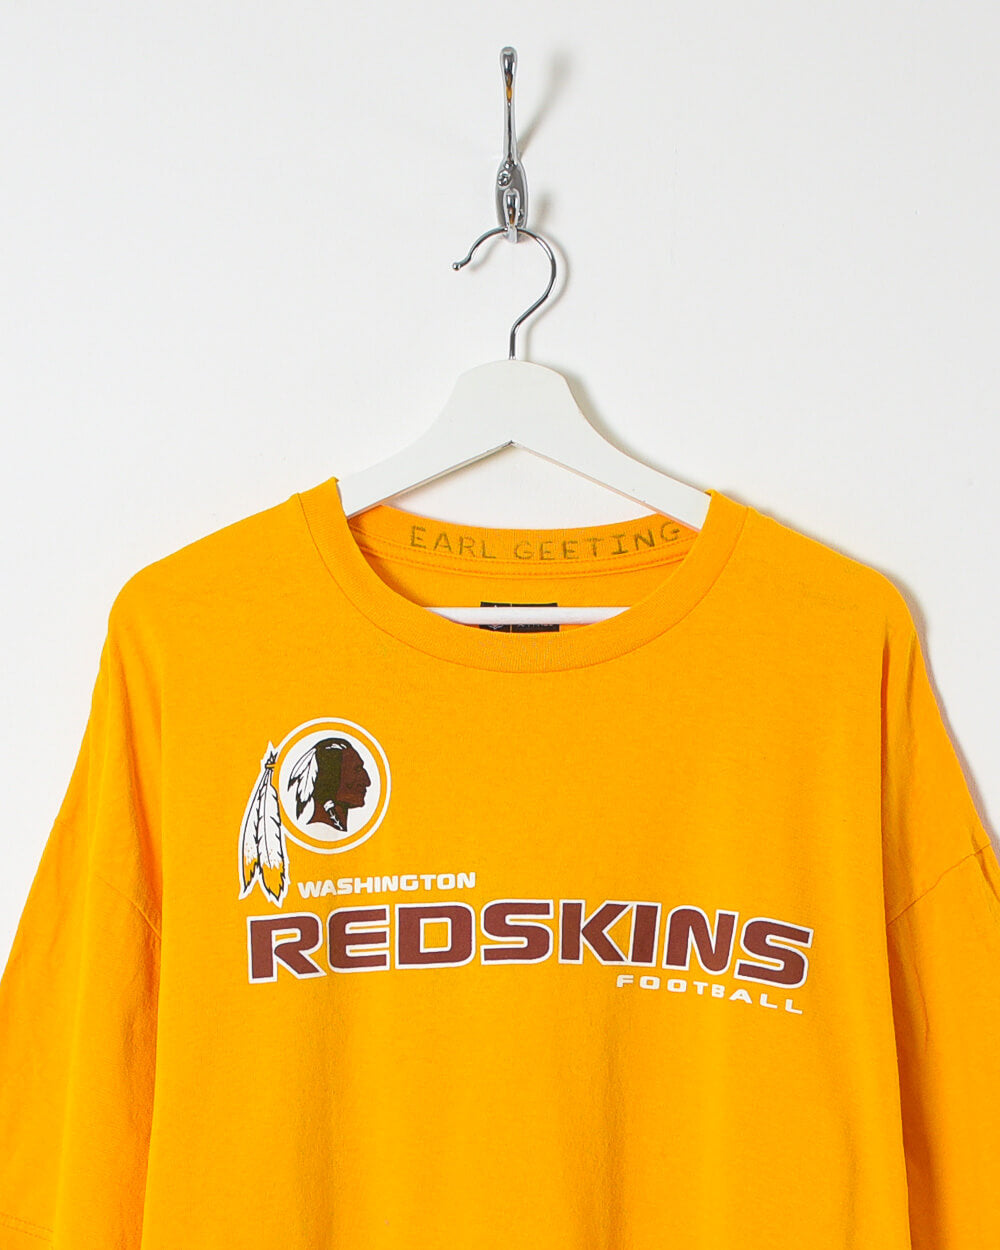 NFLWashington Redskins T-Shirt - XX-Large - Domno Vintage 90s, 80s, 00s Retro and Vintage Clothing 